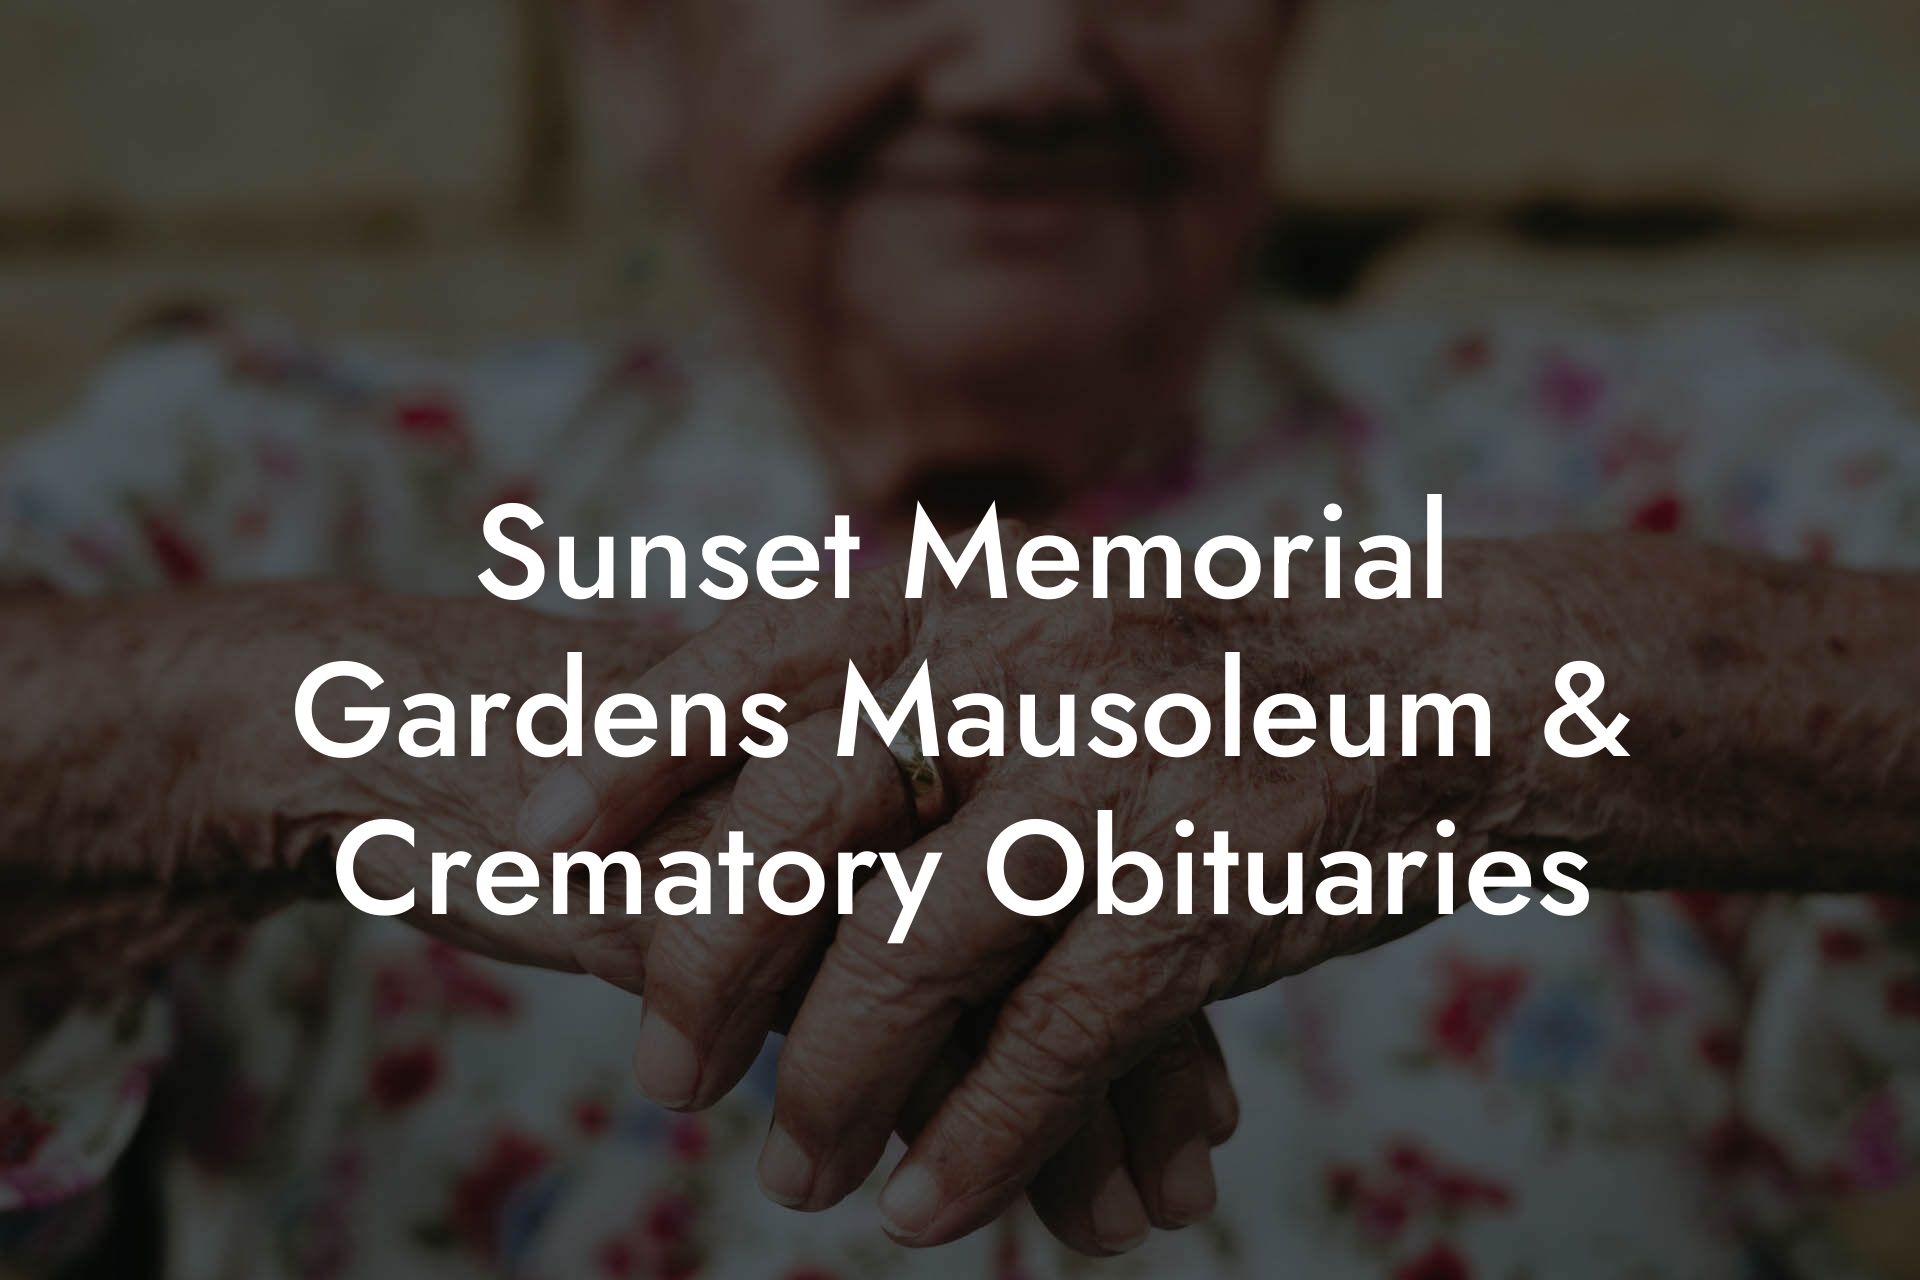 Sunset Memorial Gardens Mausoleum & Crematory Obituaries